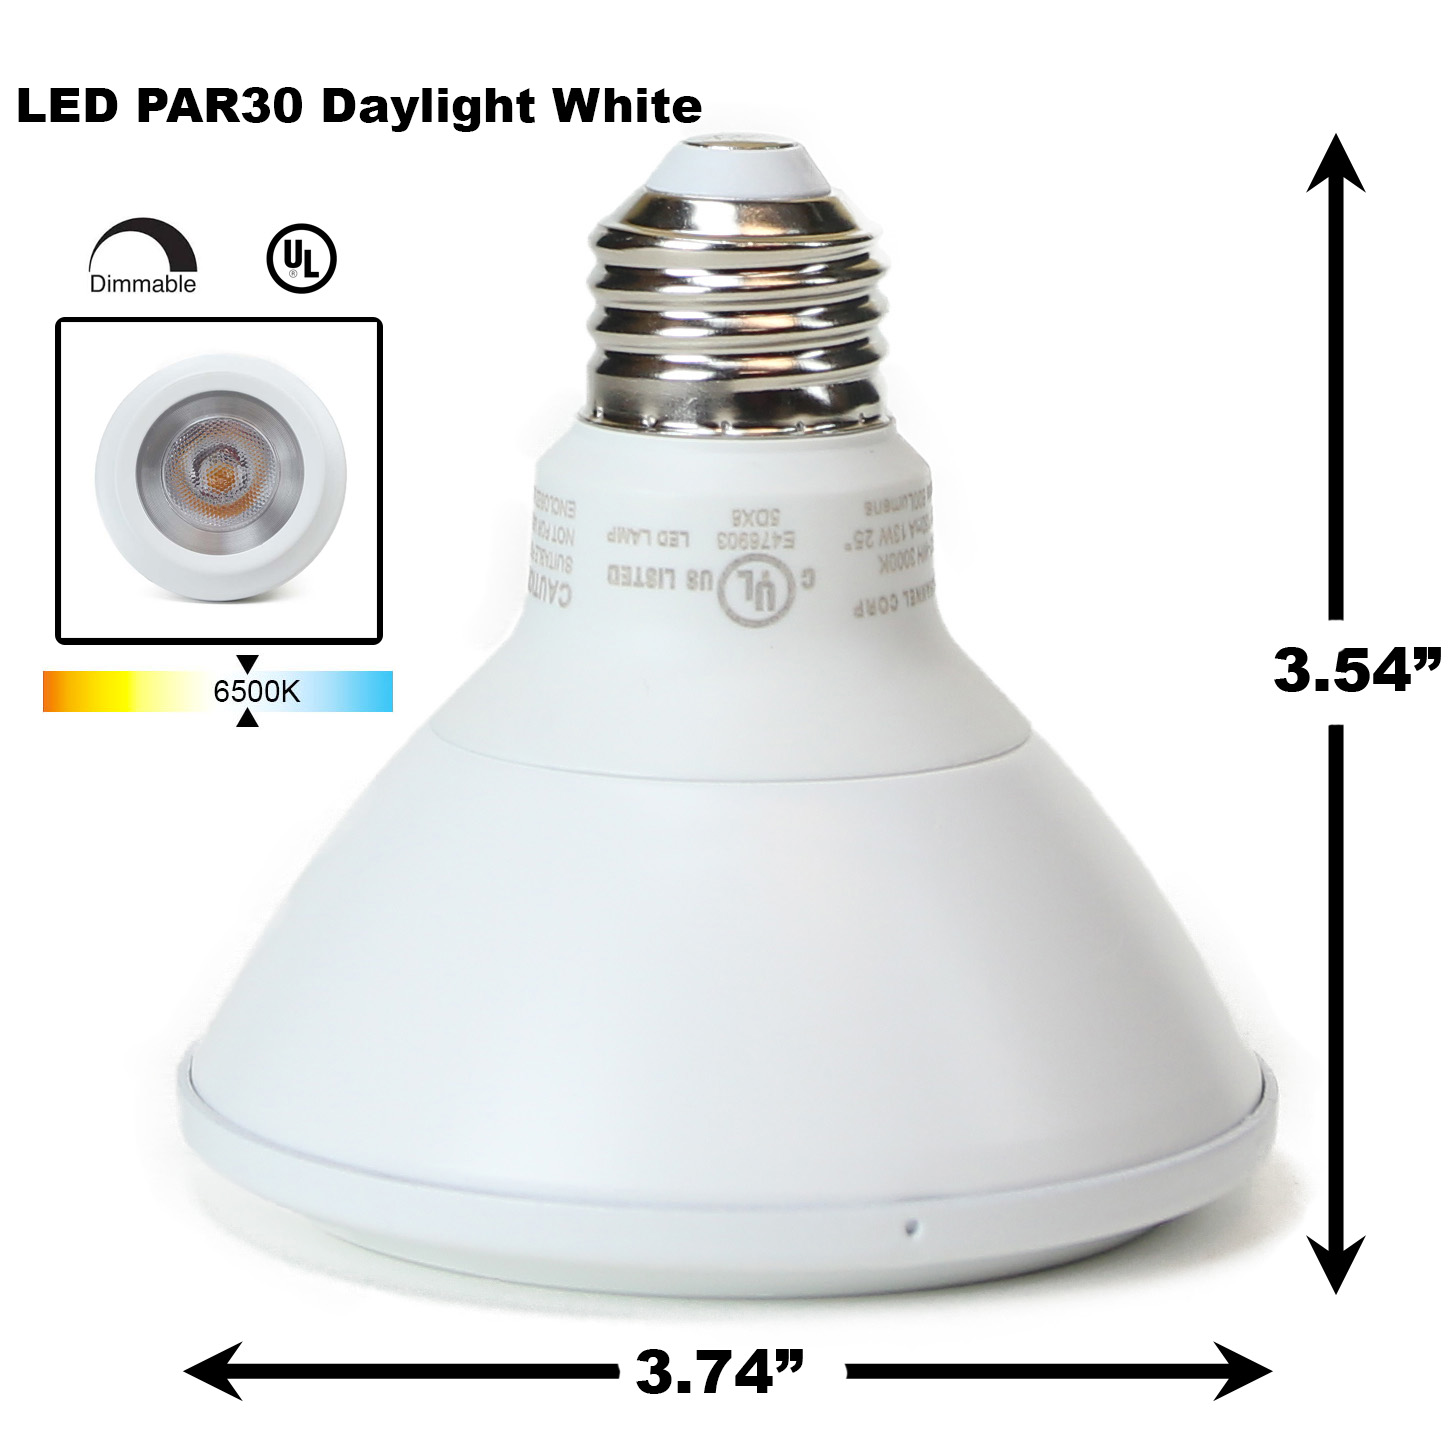 Wierook Zilver Voorbereiding Buy PAR30 LED Light Bulb 13W 3000K. In Stock & Fast Ship - Direct-Lighting .com